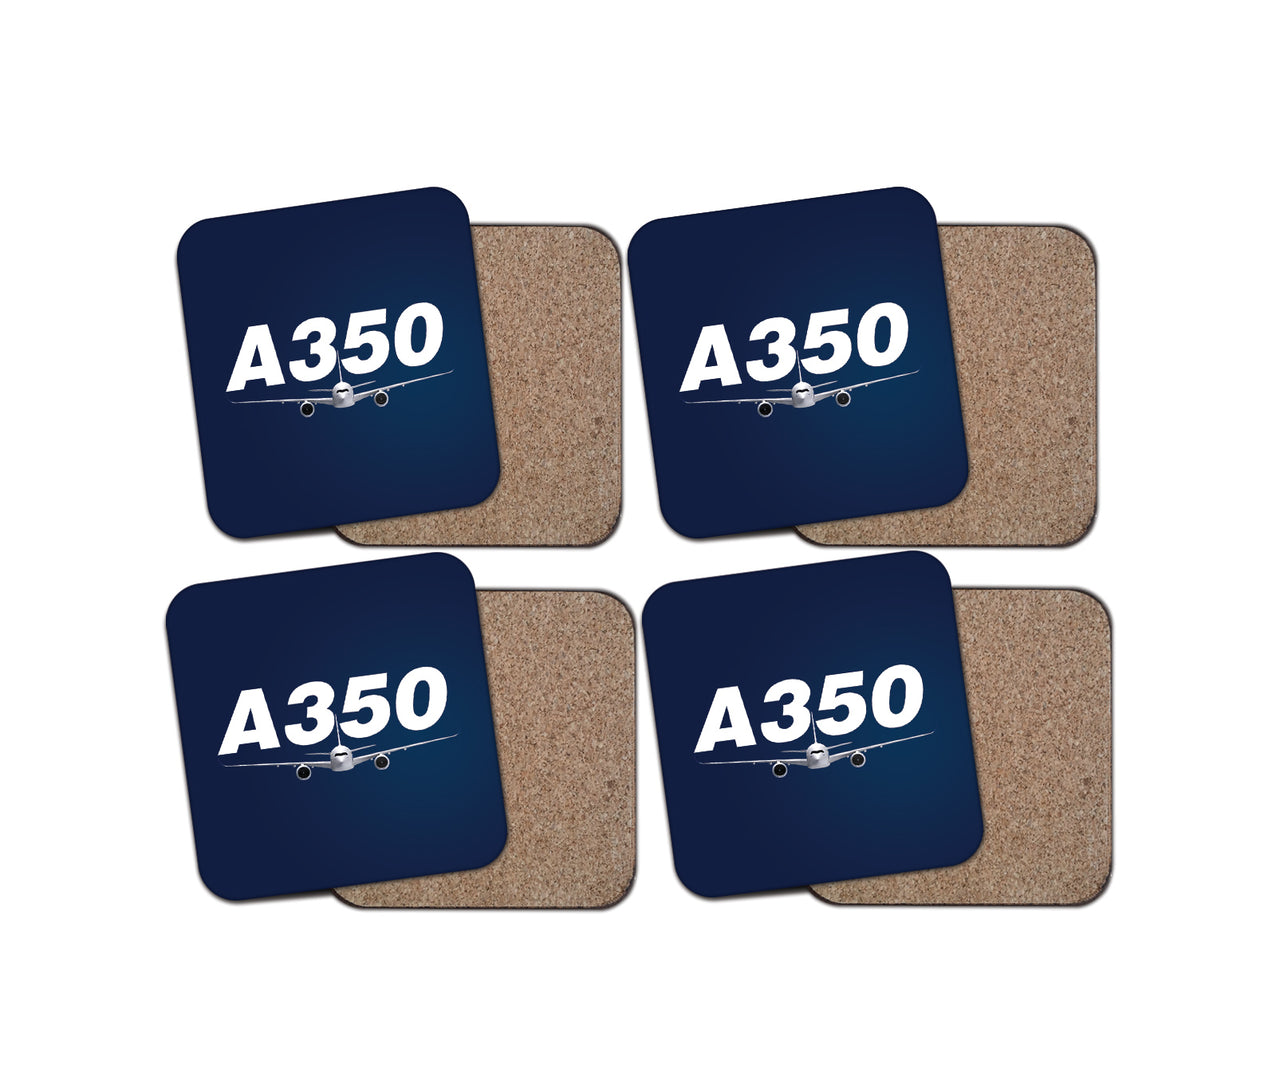 Super Airbus A350 Designed Coasters